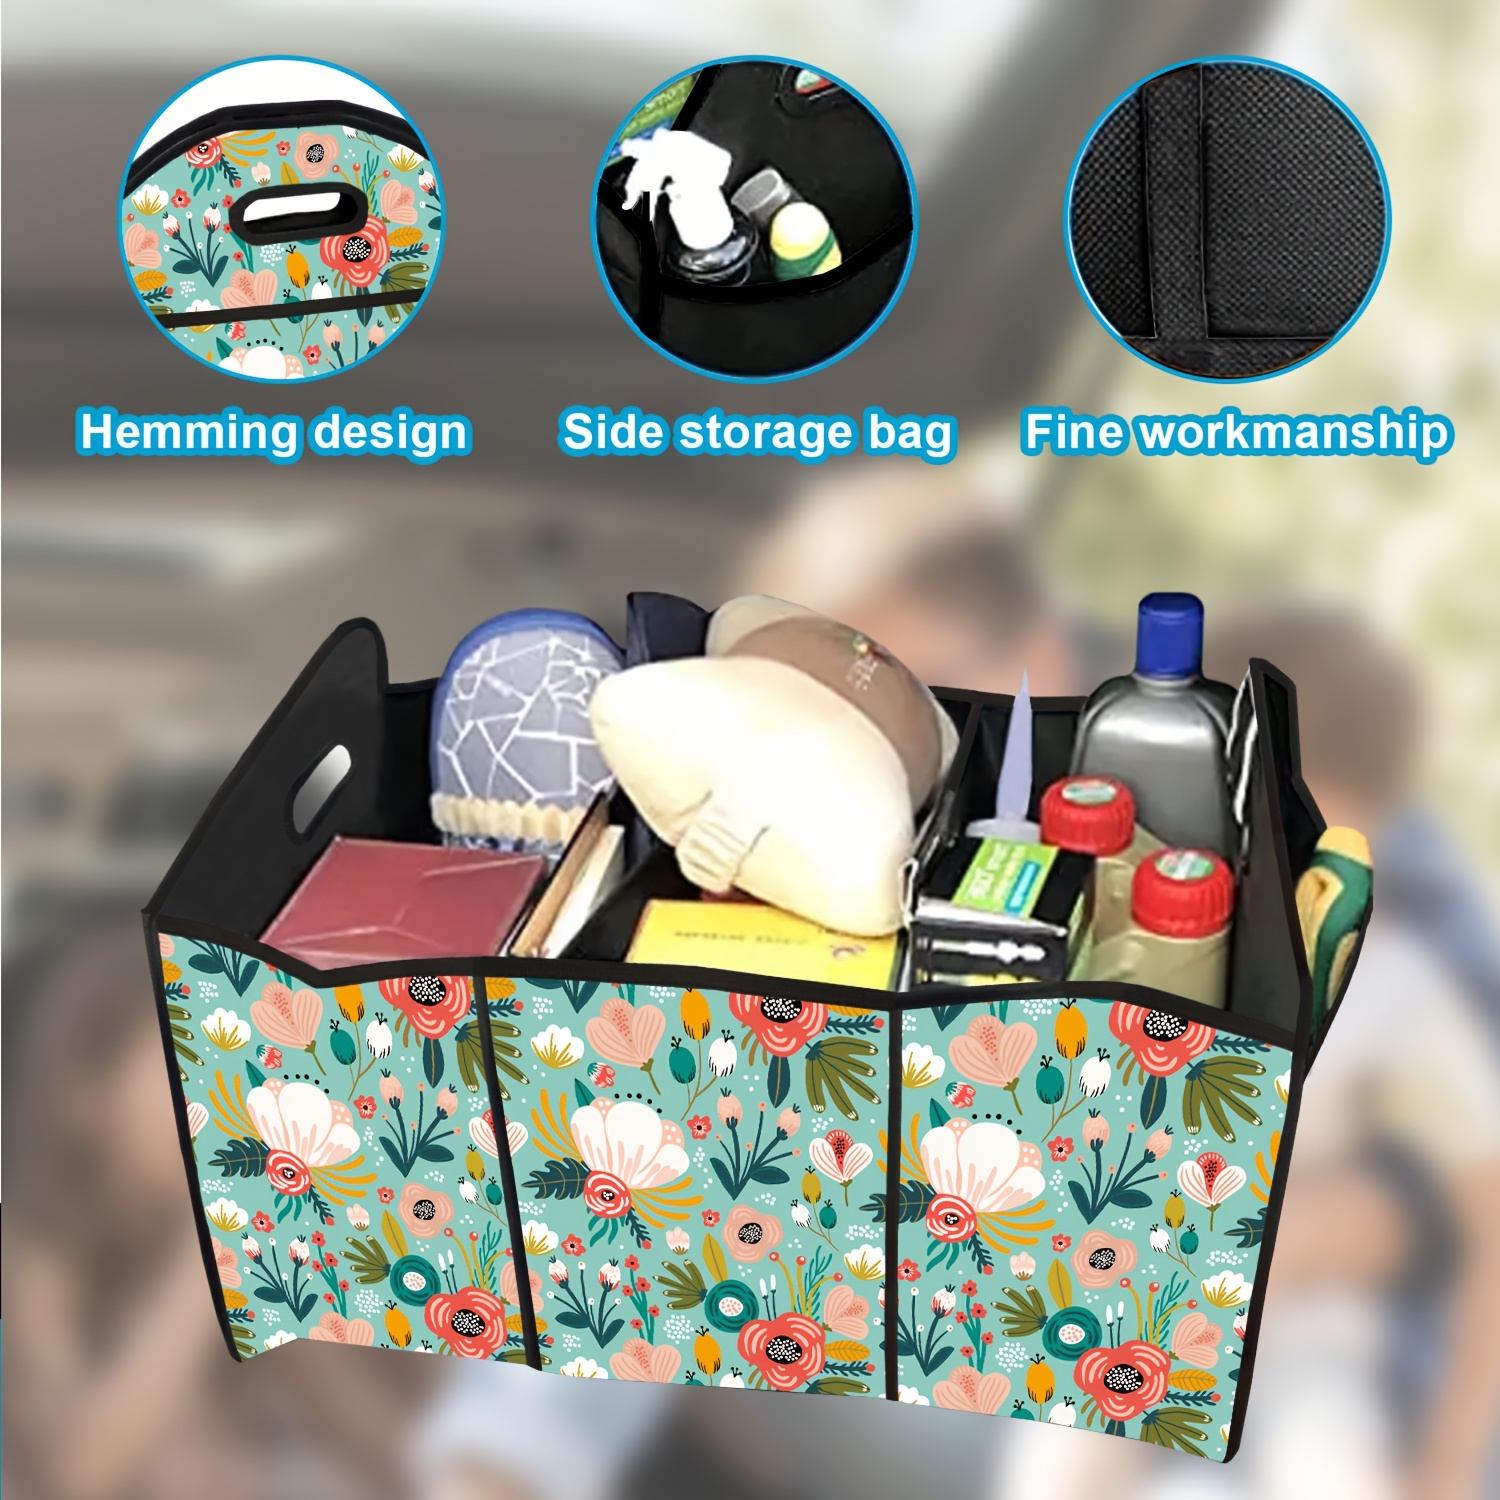 Leermoo Car Storagebox Trunk Organizer Boxes – Available In - Temu